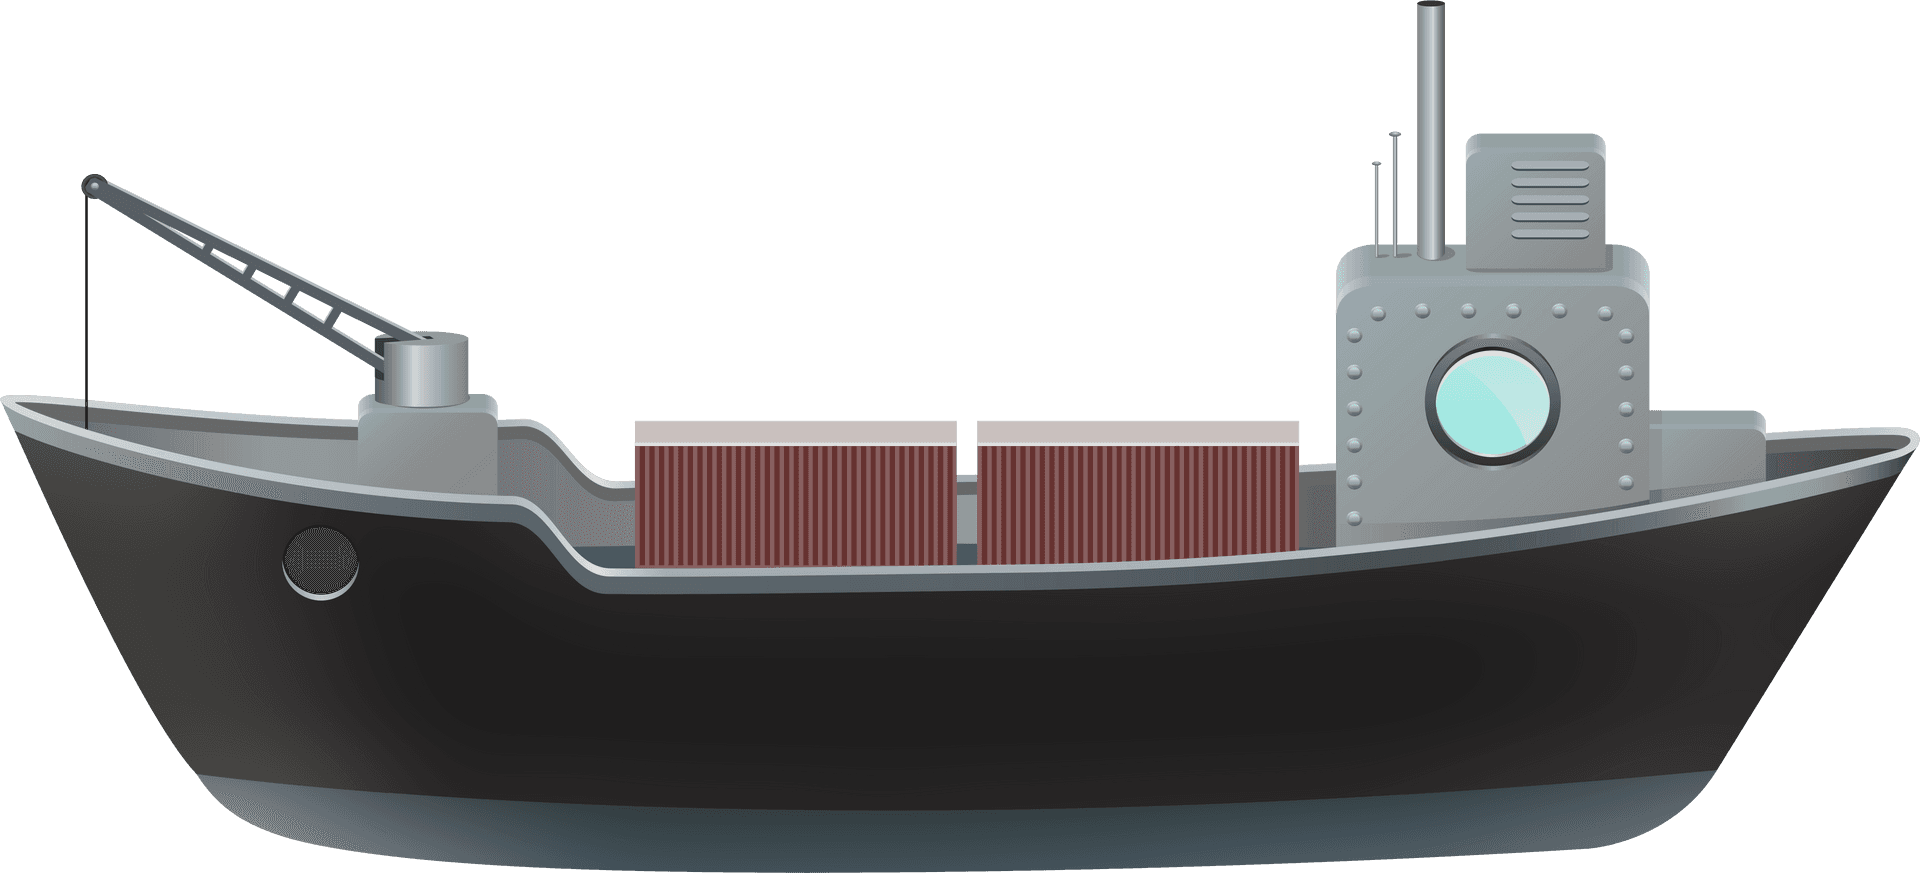 Cargo Ship Illustration PNG image